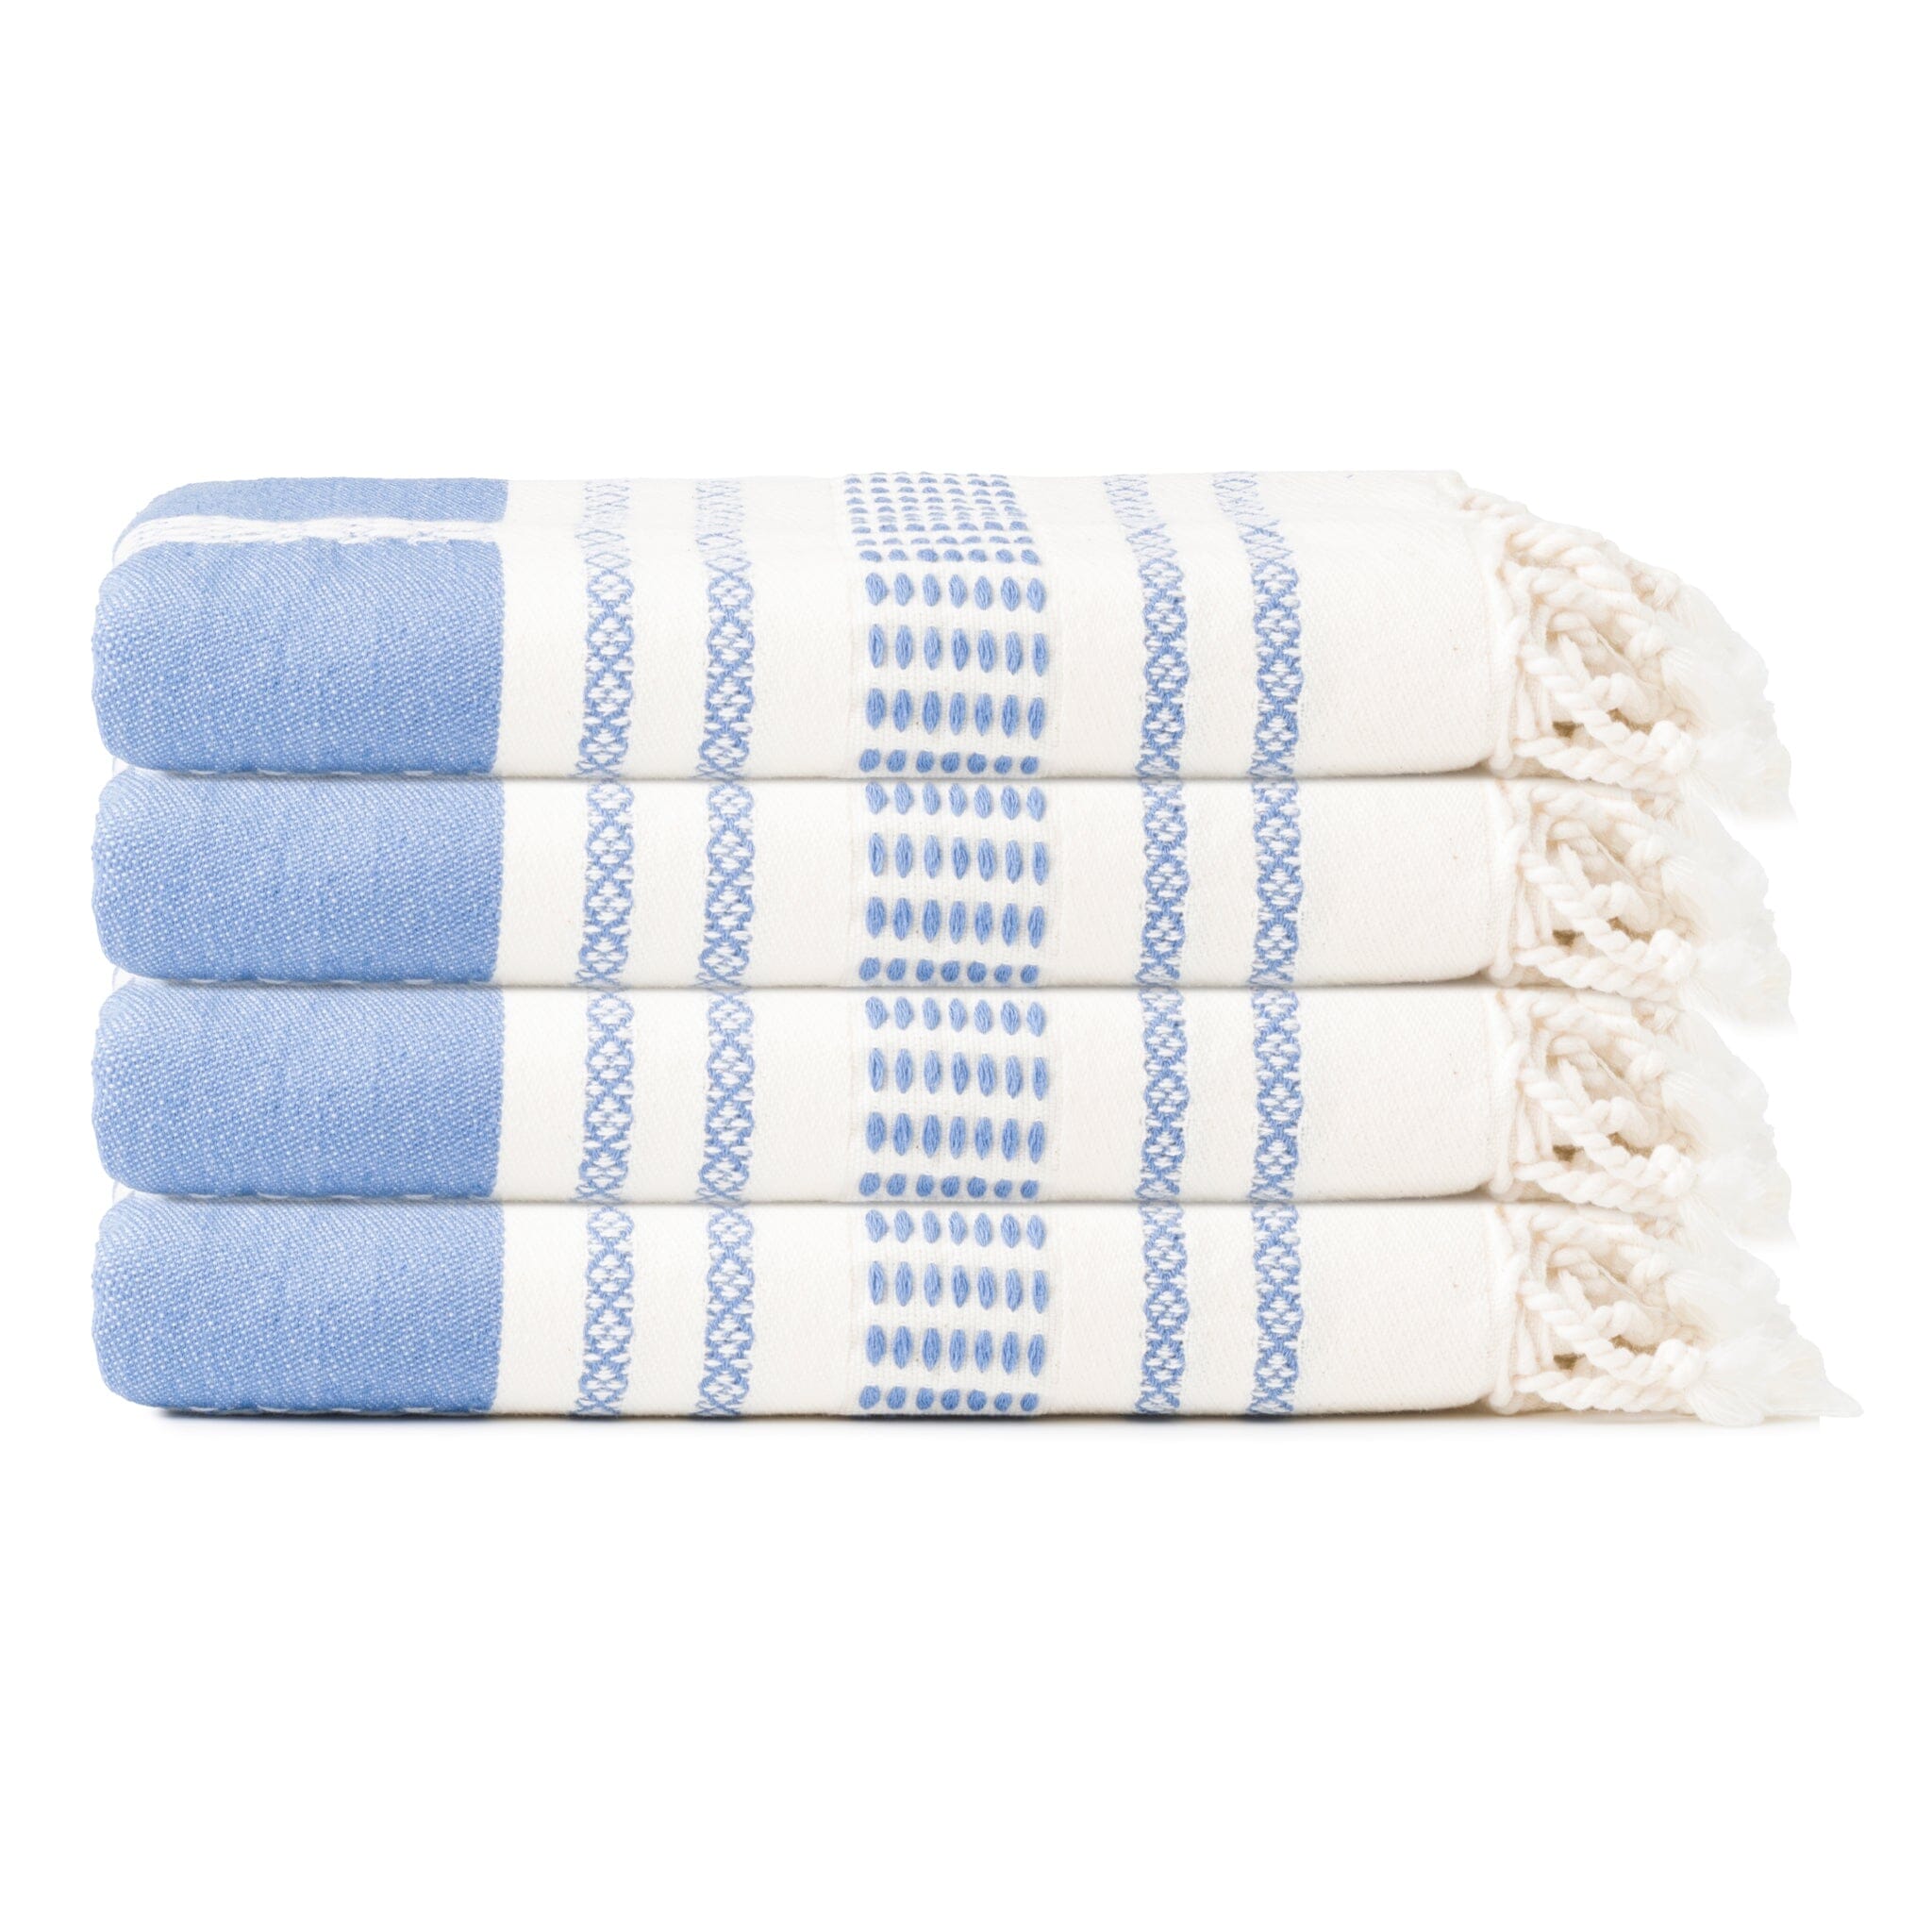 Paros Stripe Hand Towel, Turkish Hand Towels